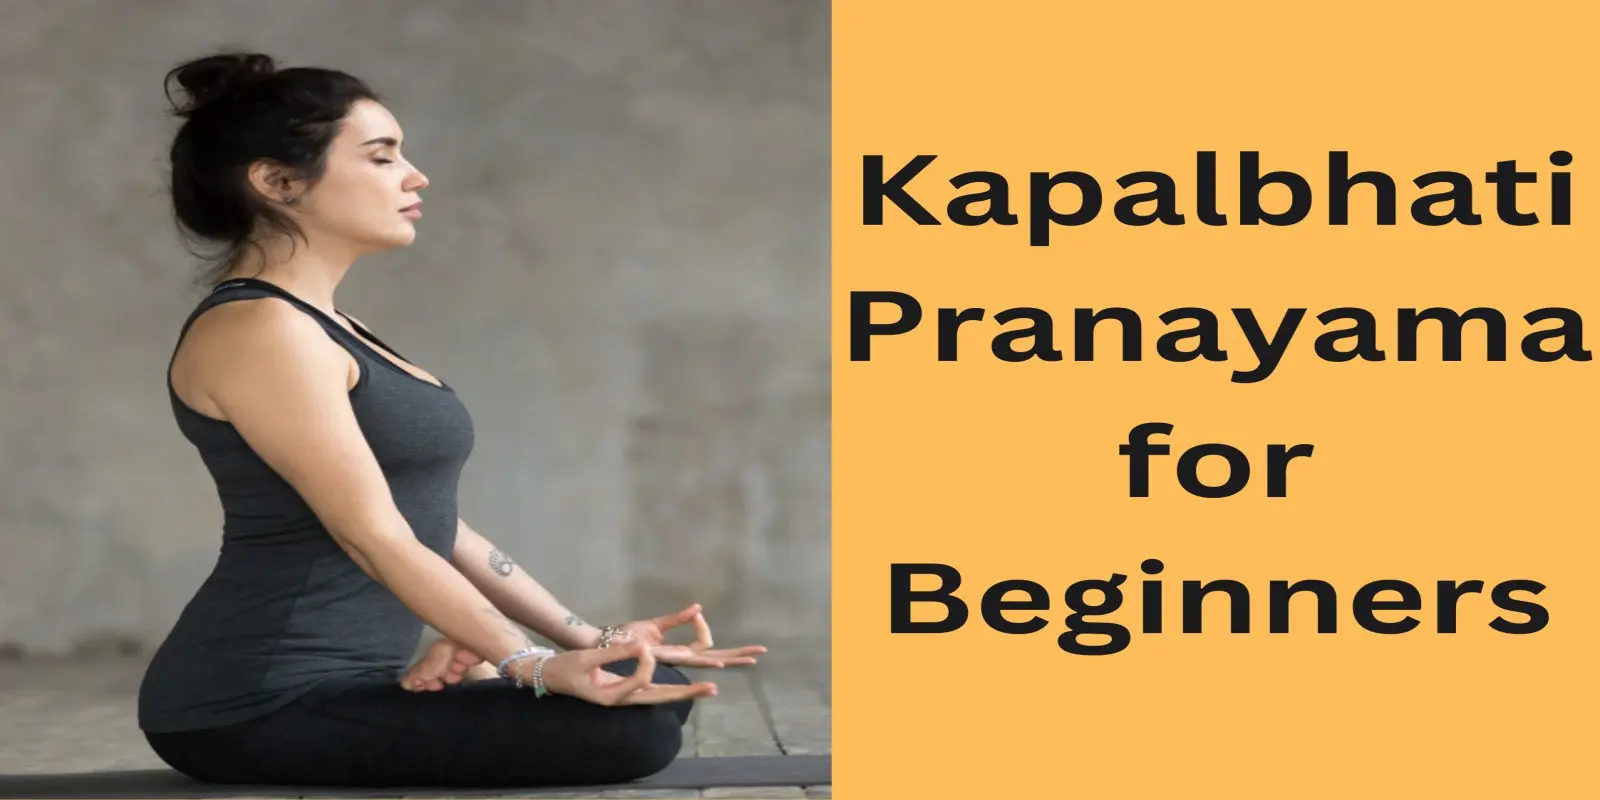 Kapalbhati Pranayama for Beginners: A Simple Breathing Technique